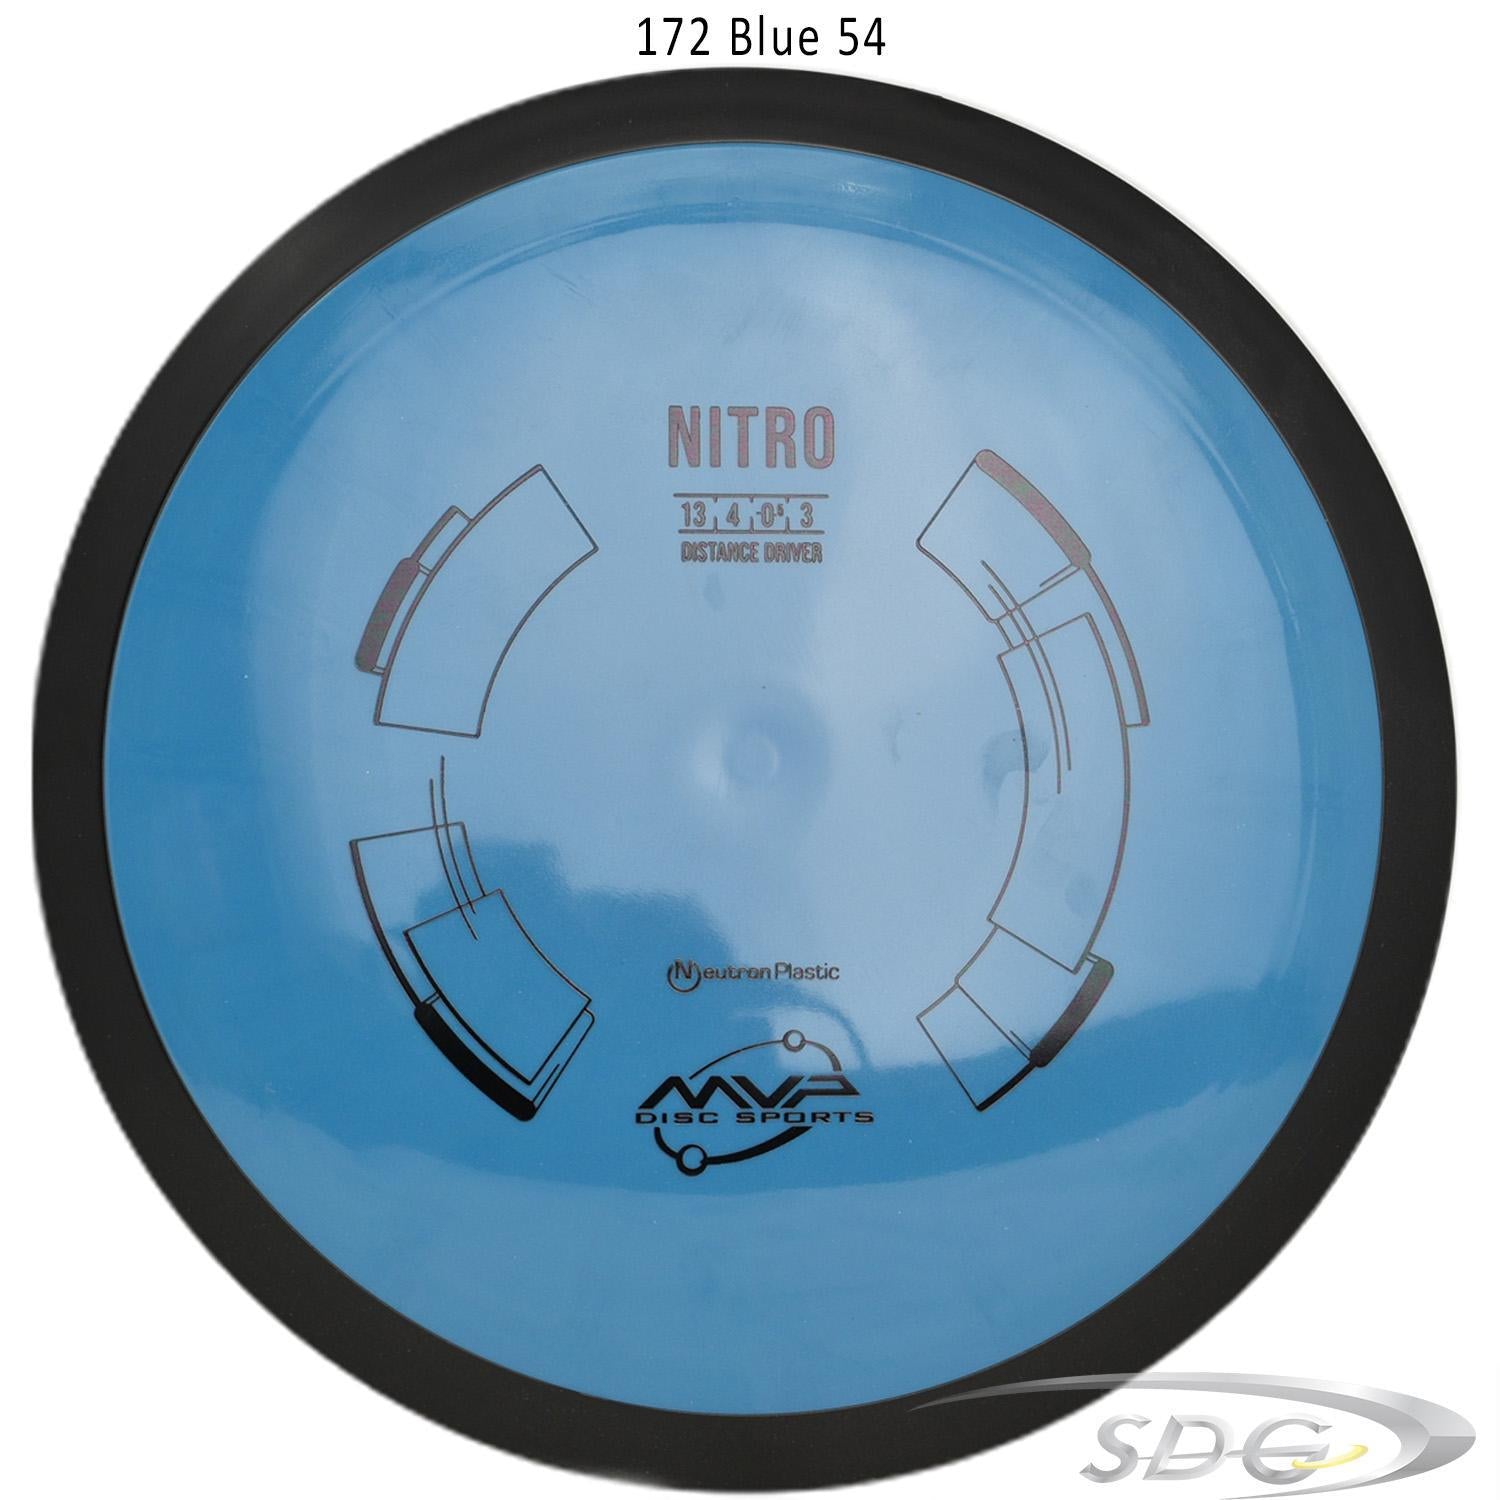 mvp-neutron-nitro-disc-golf-distance-driver 172 Blue 54 